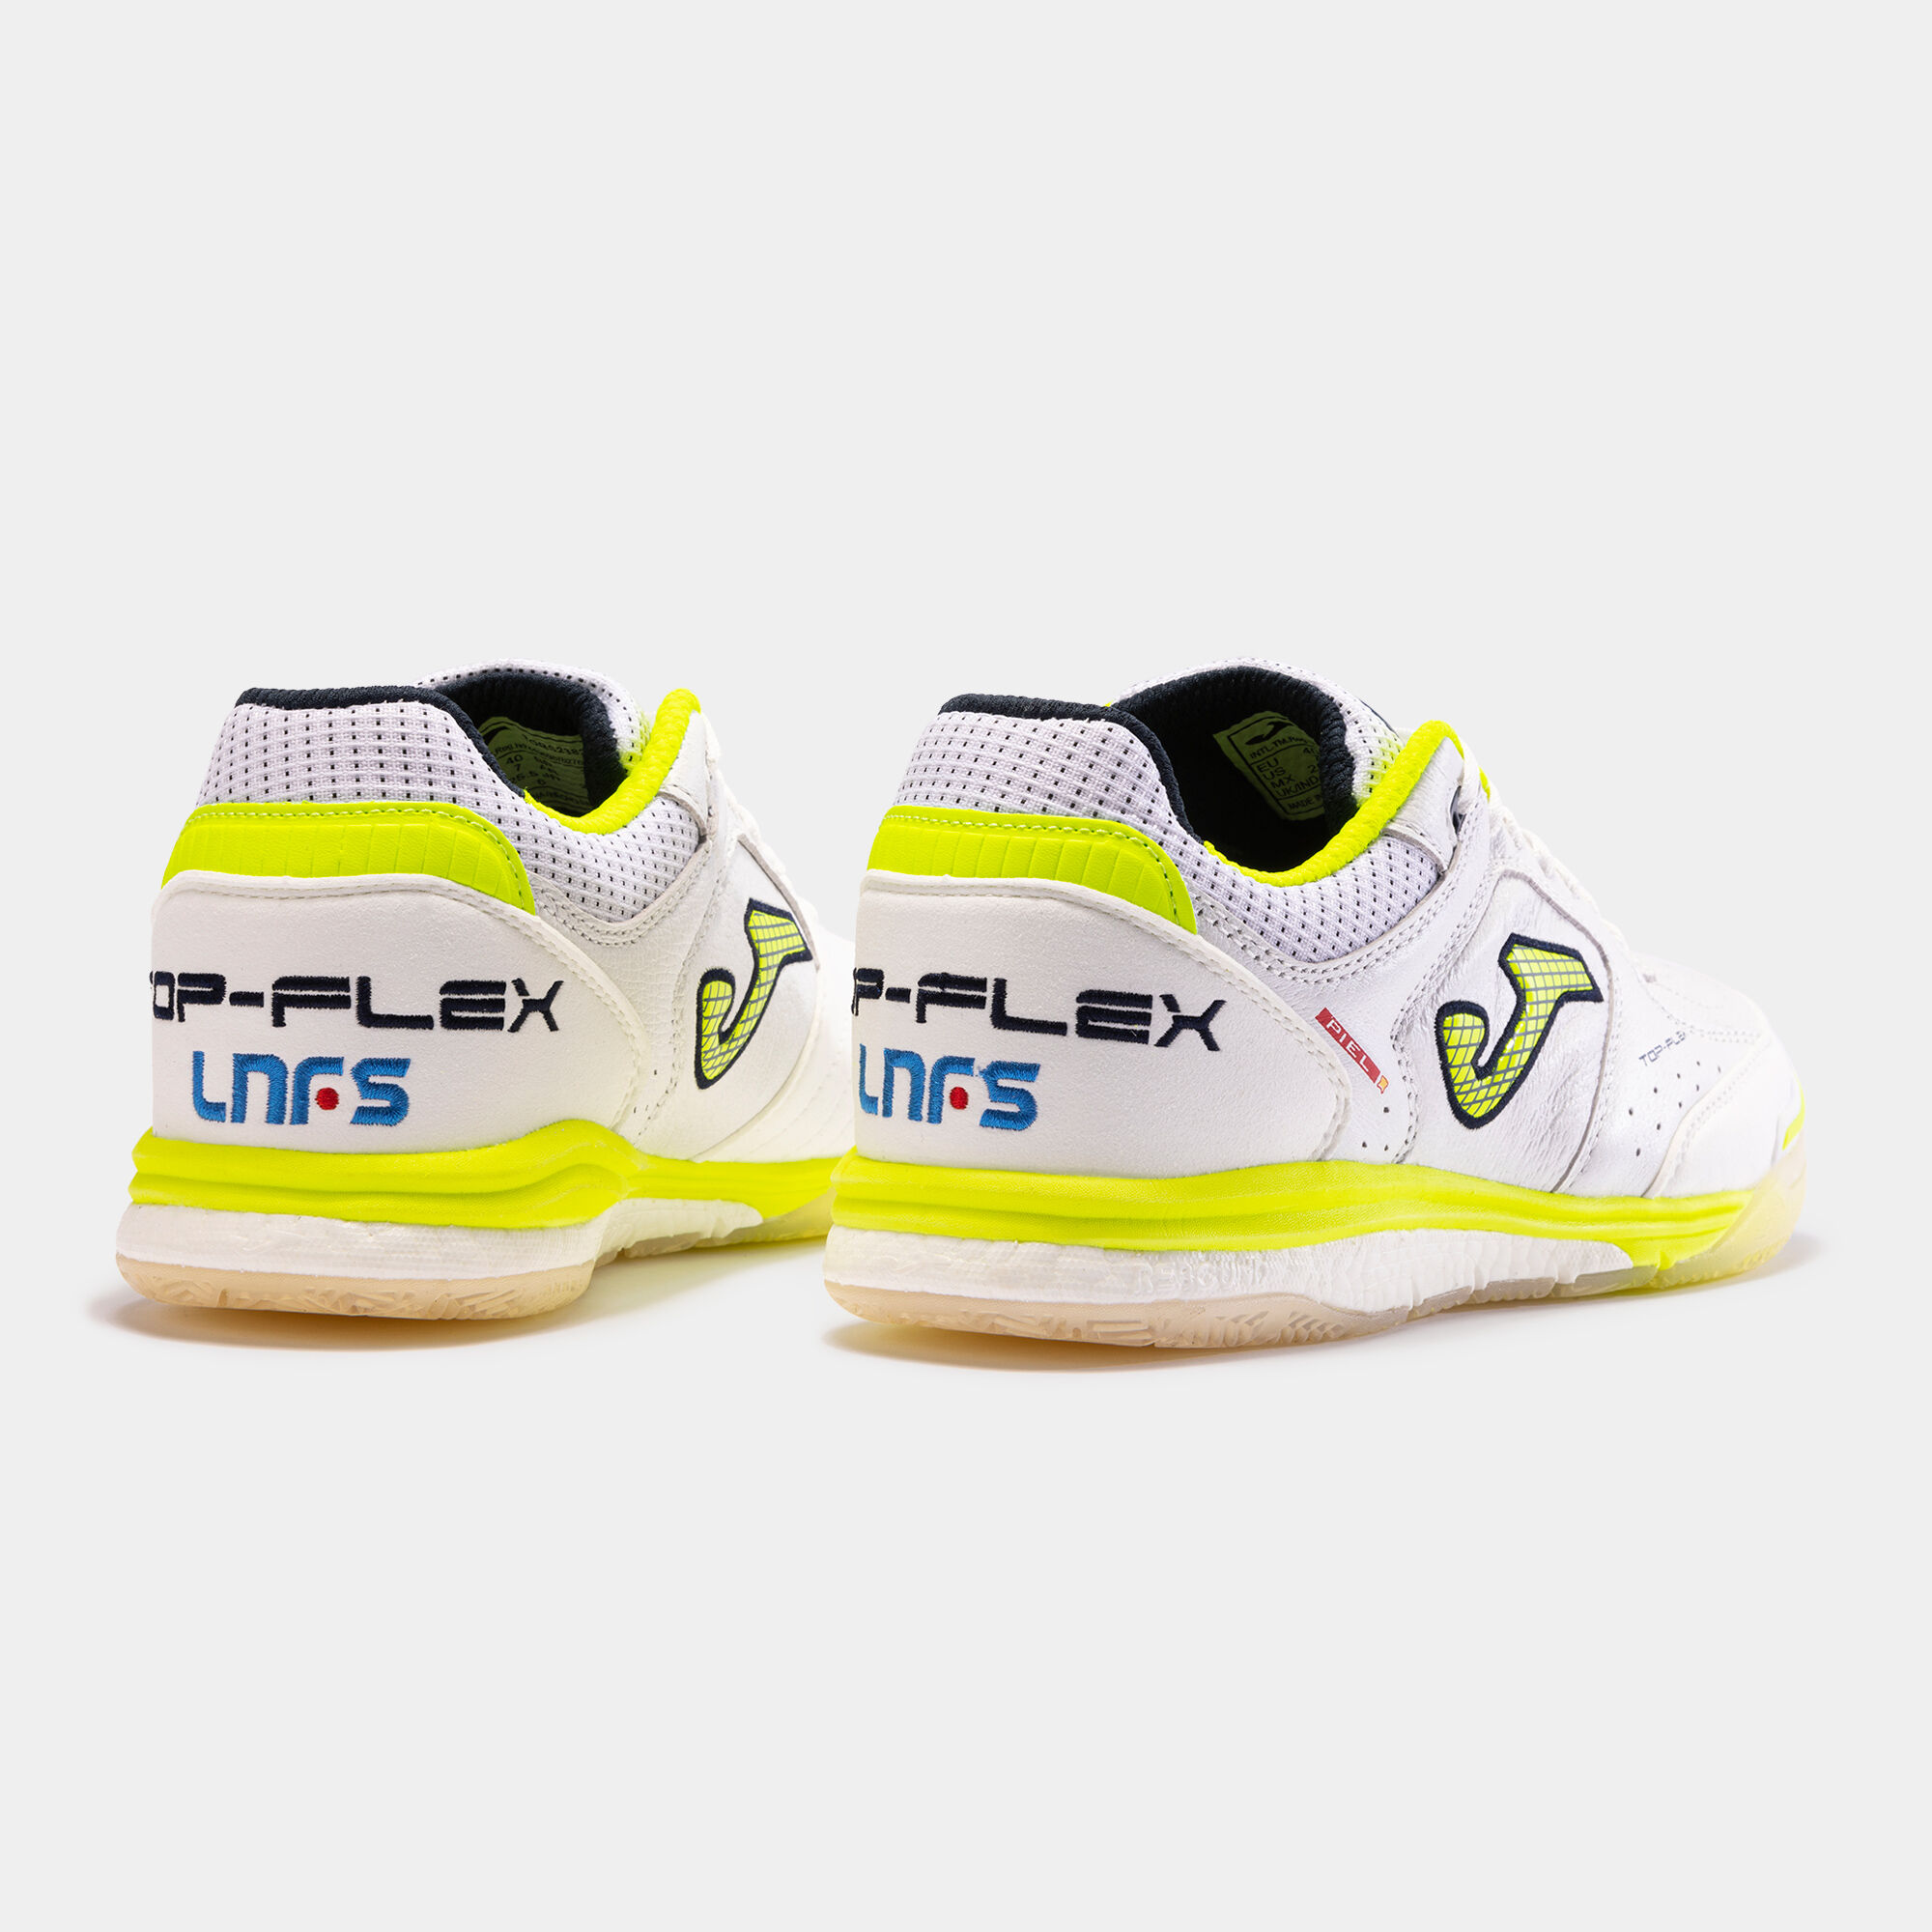 Futsal shoes Top Flex Rebound 23 indoor fluorescent green red